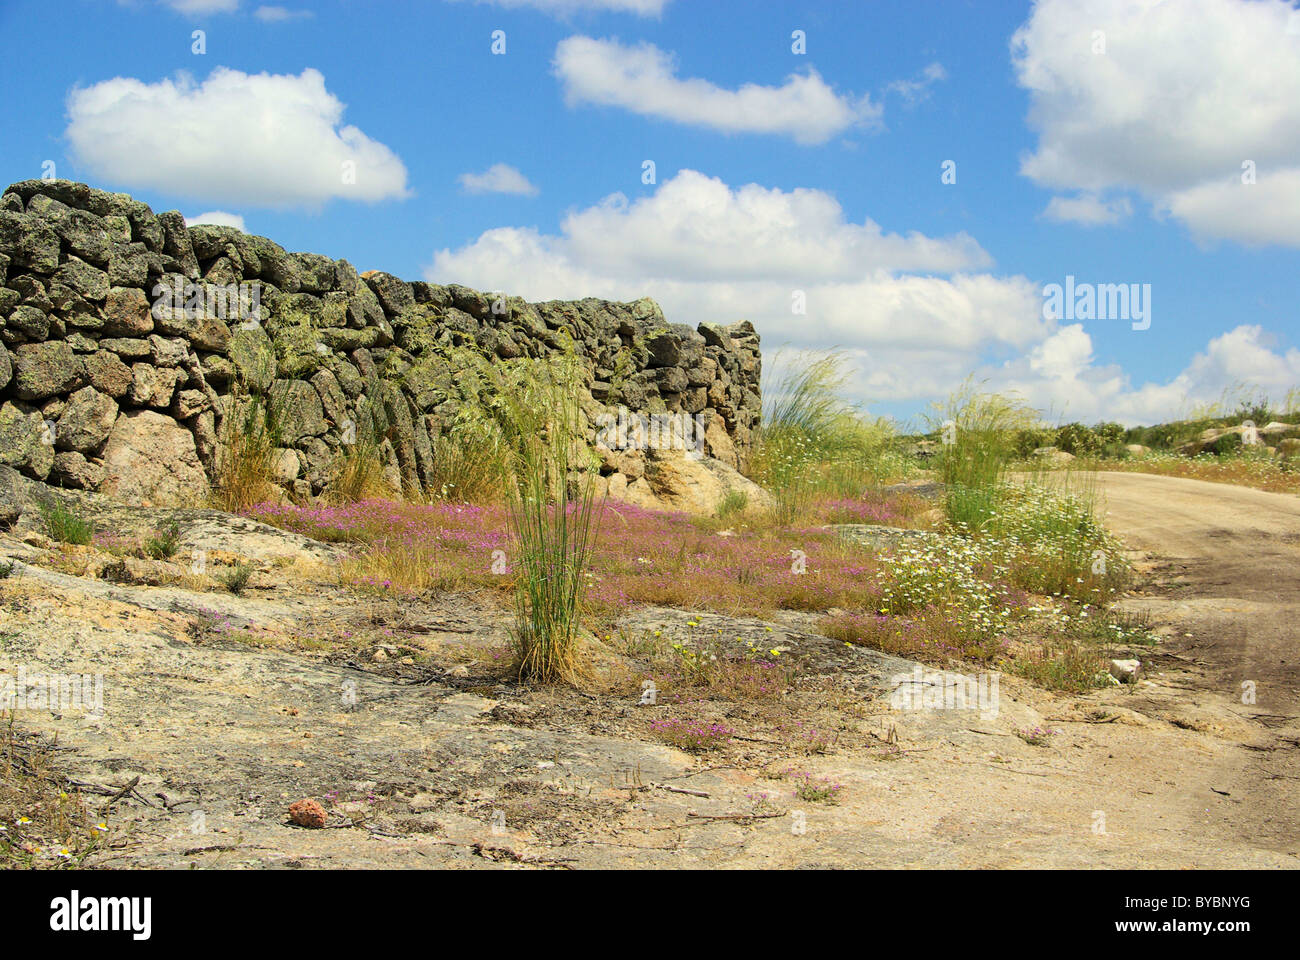 A Valencia De Alcantara Granitfelsenlandschaft - Valencia De Alcantara di roccia di granito paesaggio 40 Foto Stock